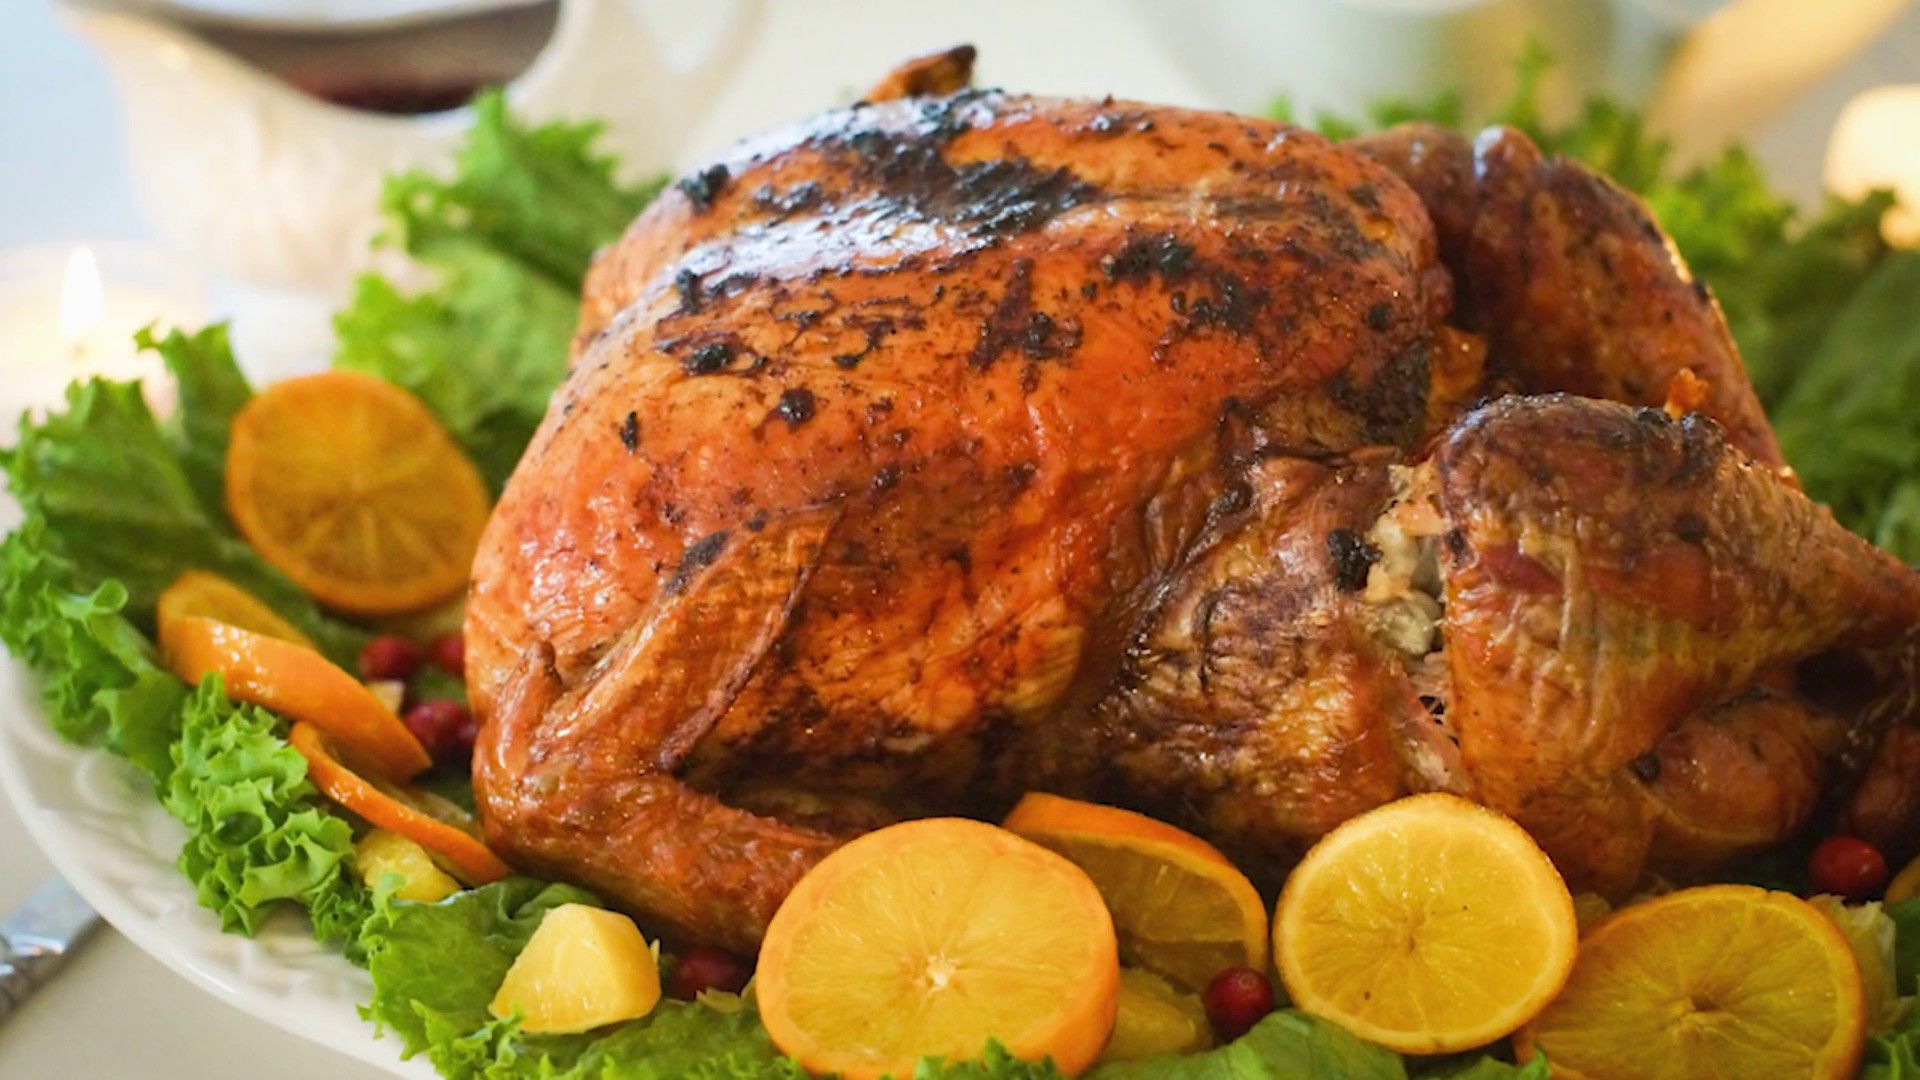 Thanksgiving in Las Vegas 2021: Dinner, Turkey to Go, Restaurants